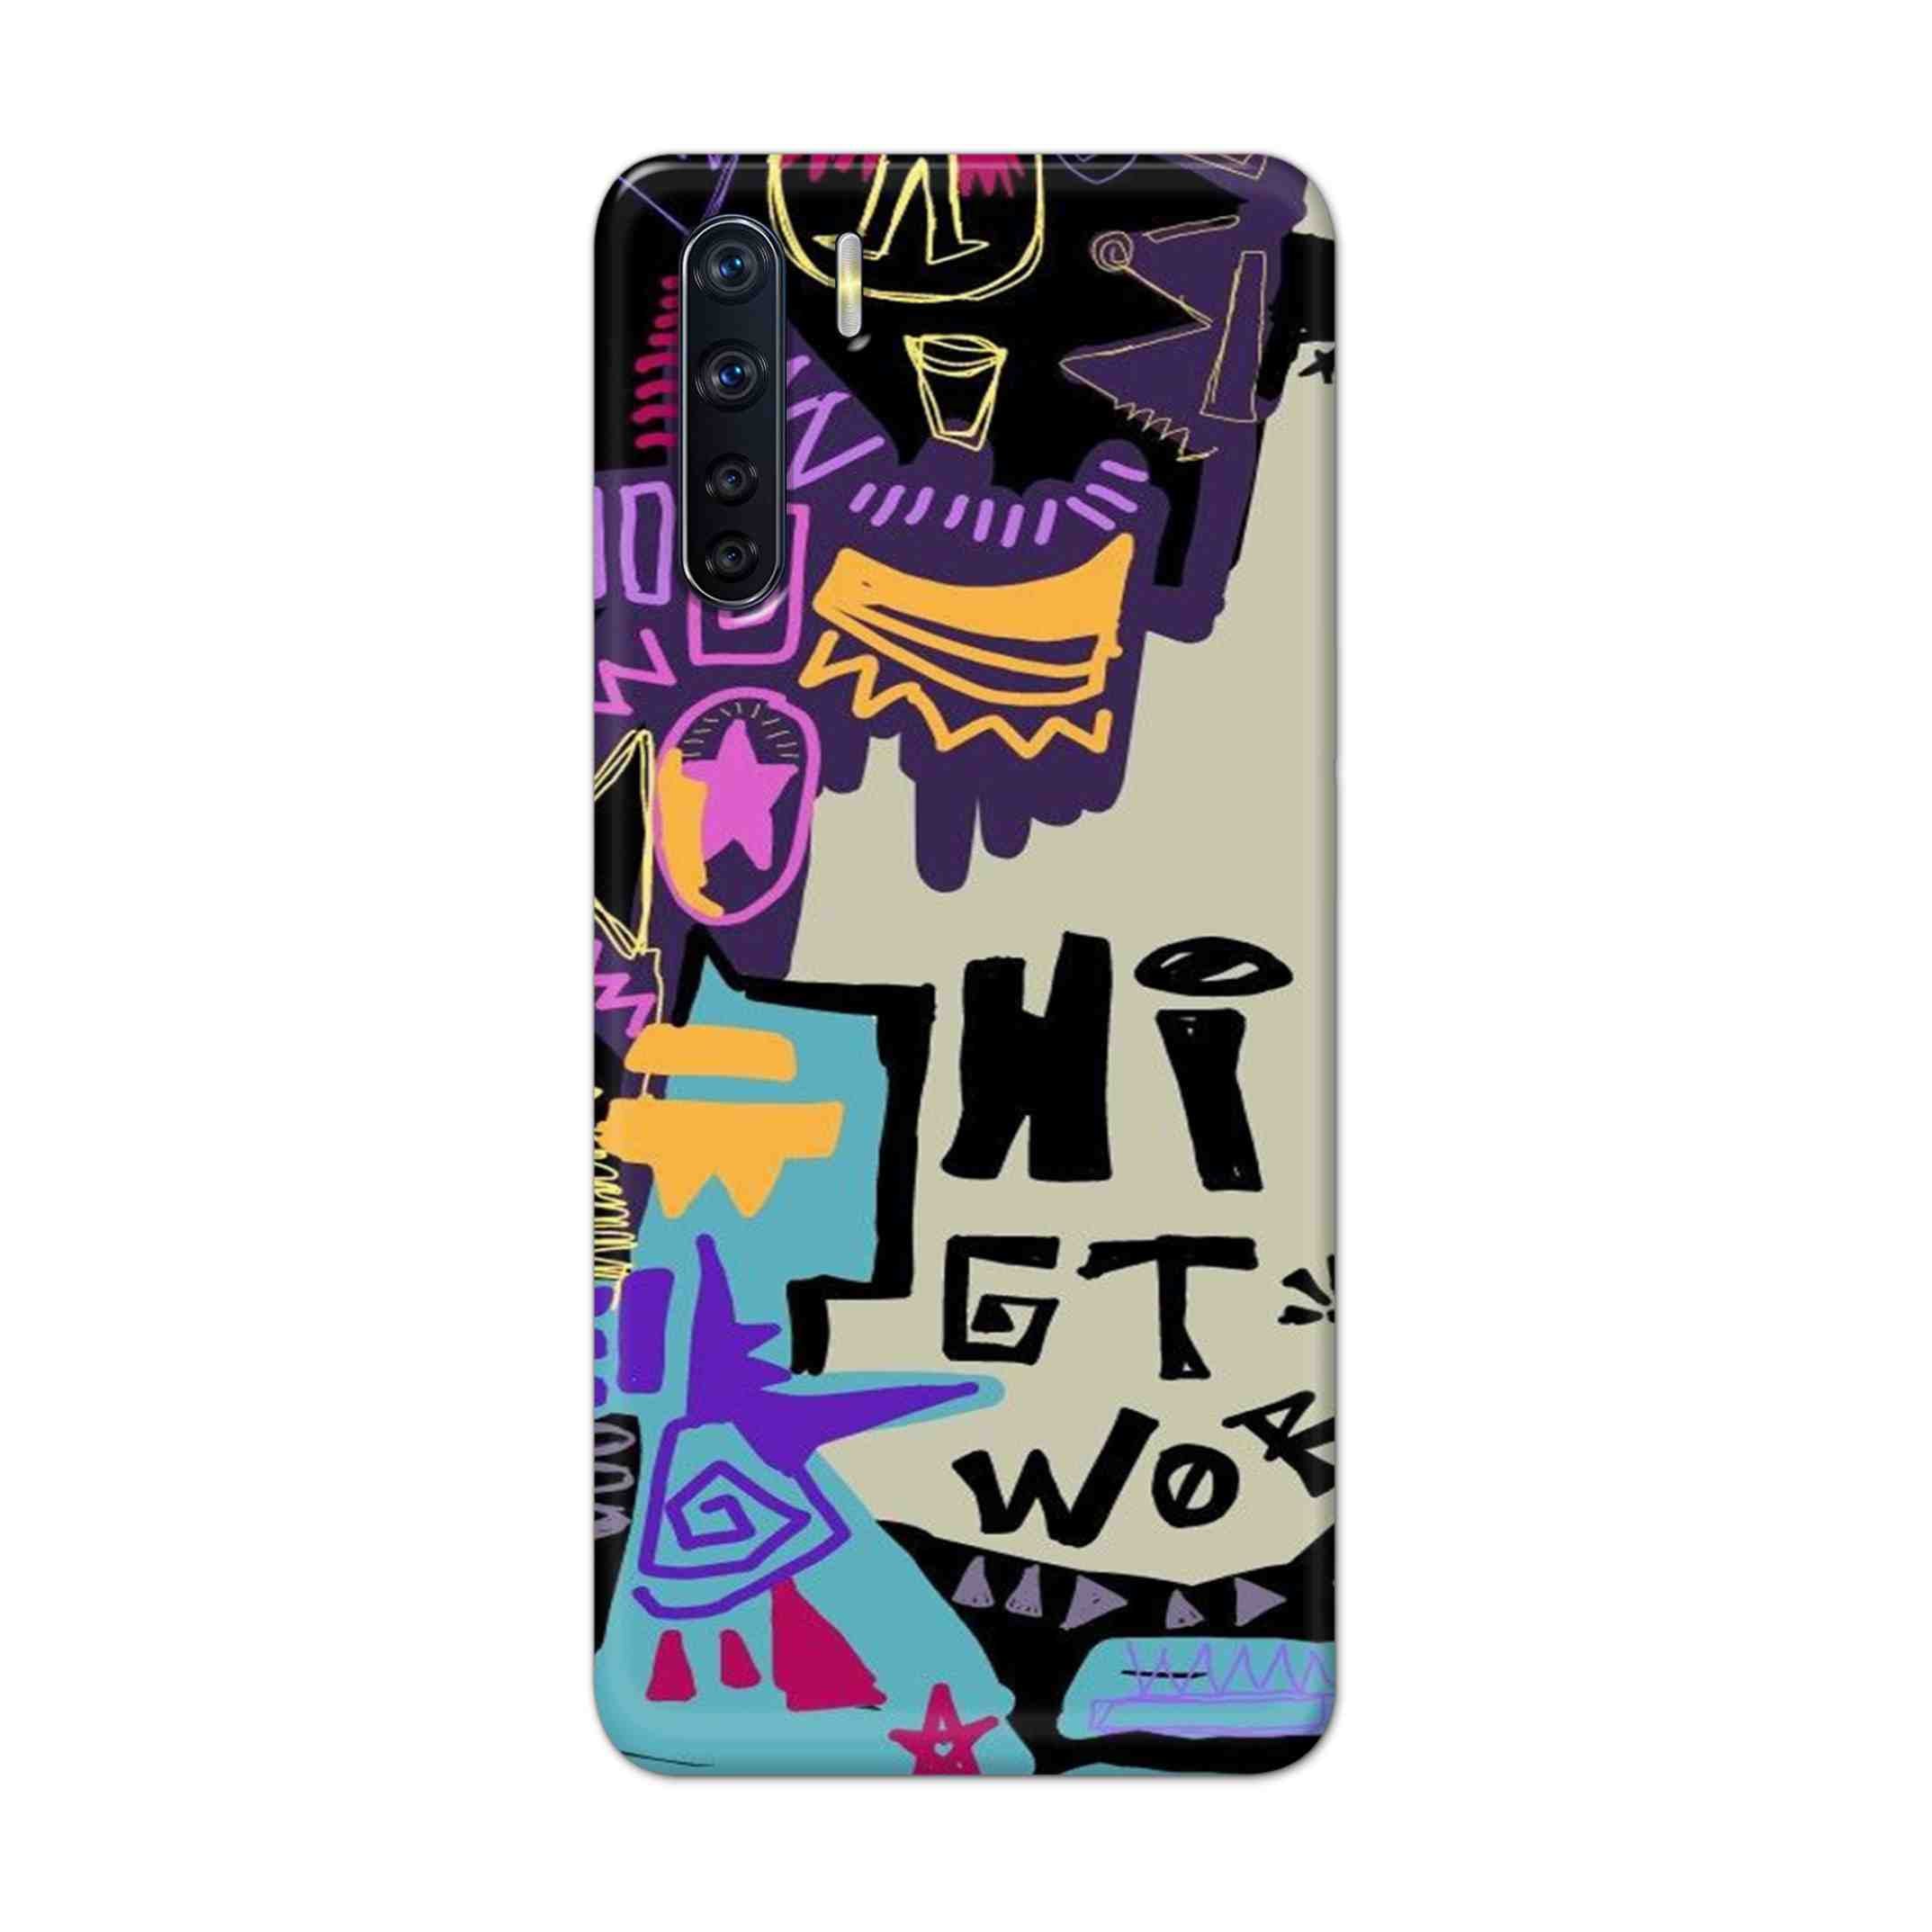 Buy Hi Gt World Hard Back Mobile Phone Case Cover For OPPO F15 Online